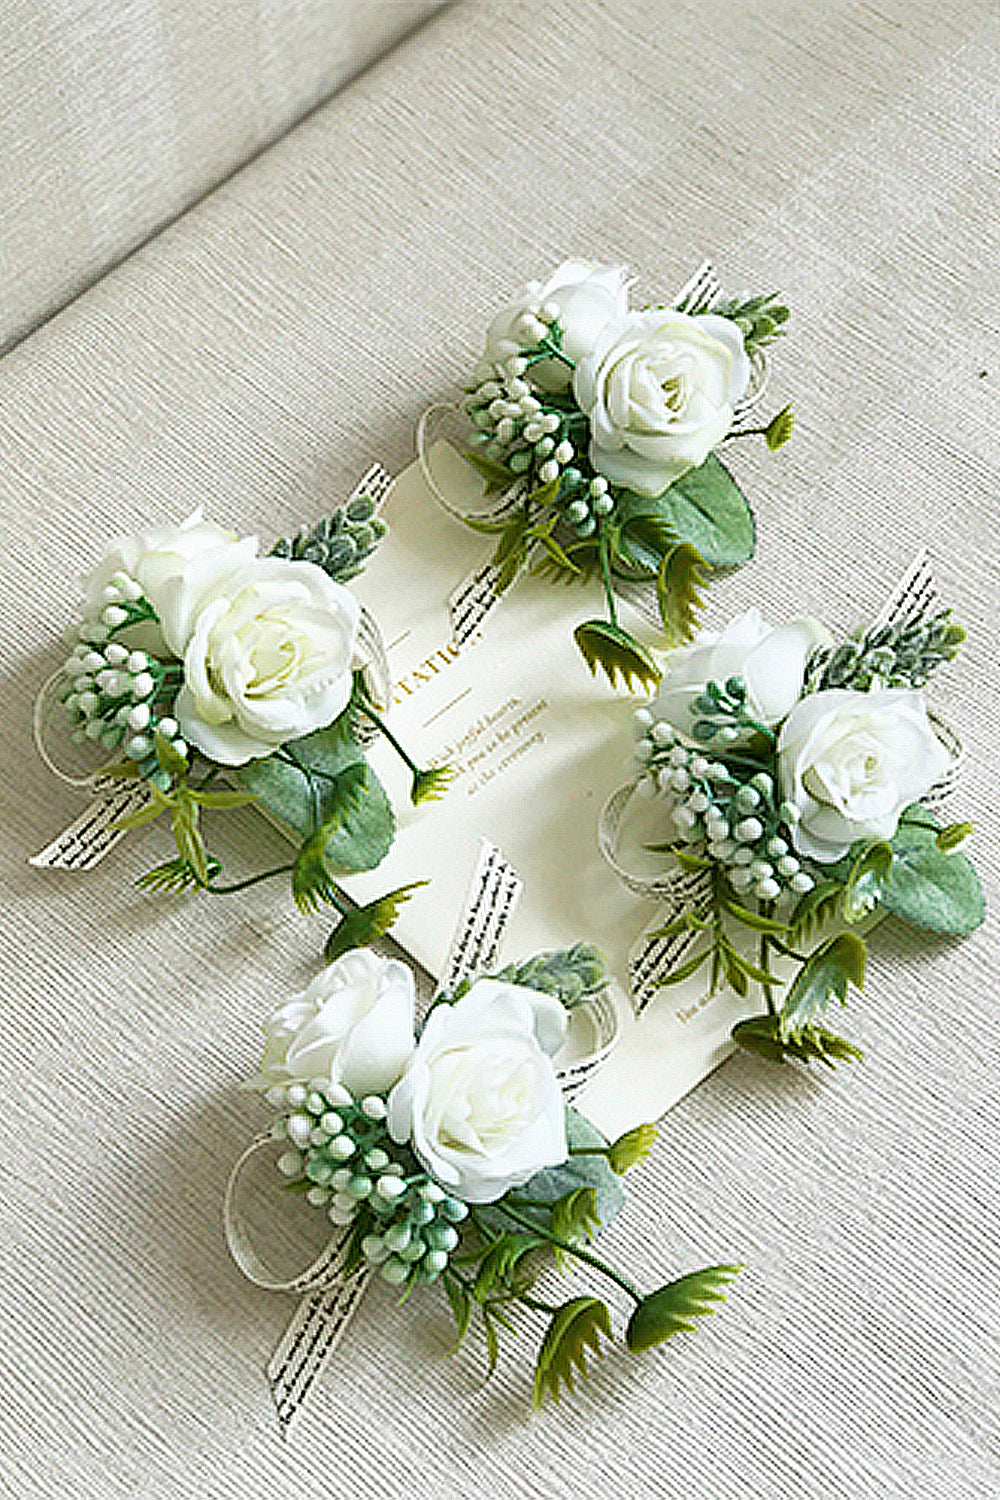 Rustic Wedding Wrist Corsage - White Green Prom Flower Bracelet